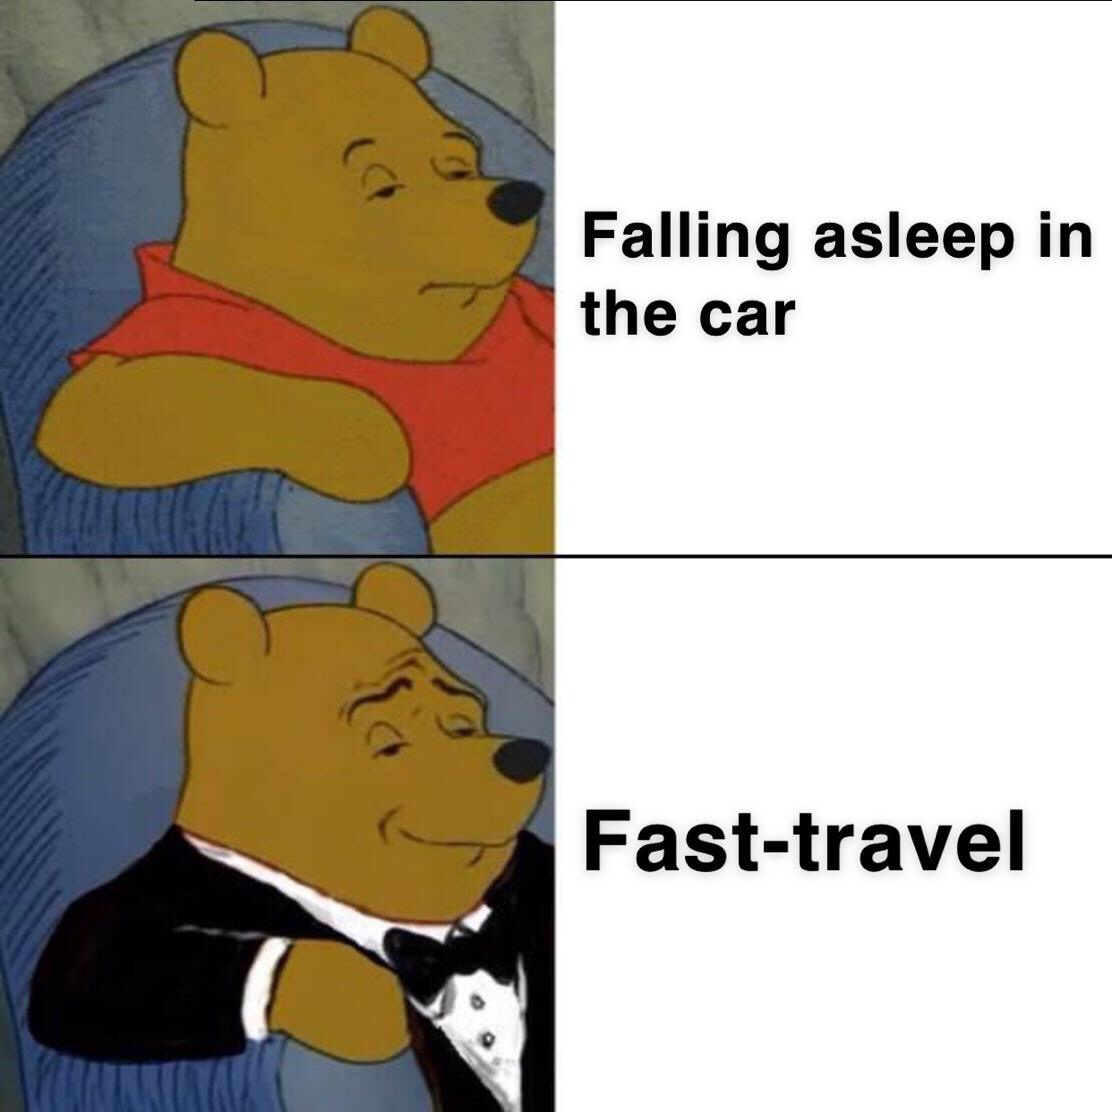 winnie the pooh meme - Falling asleep in the car Fasttravel